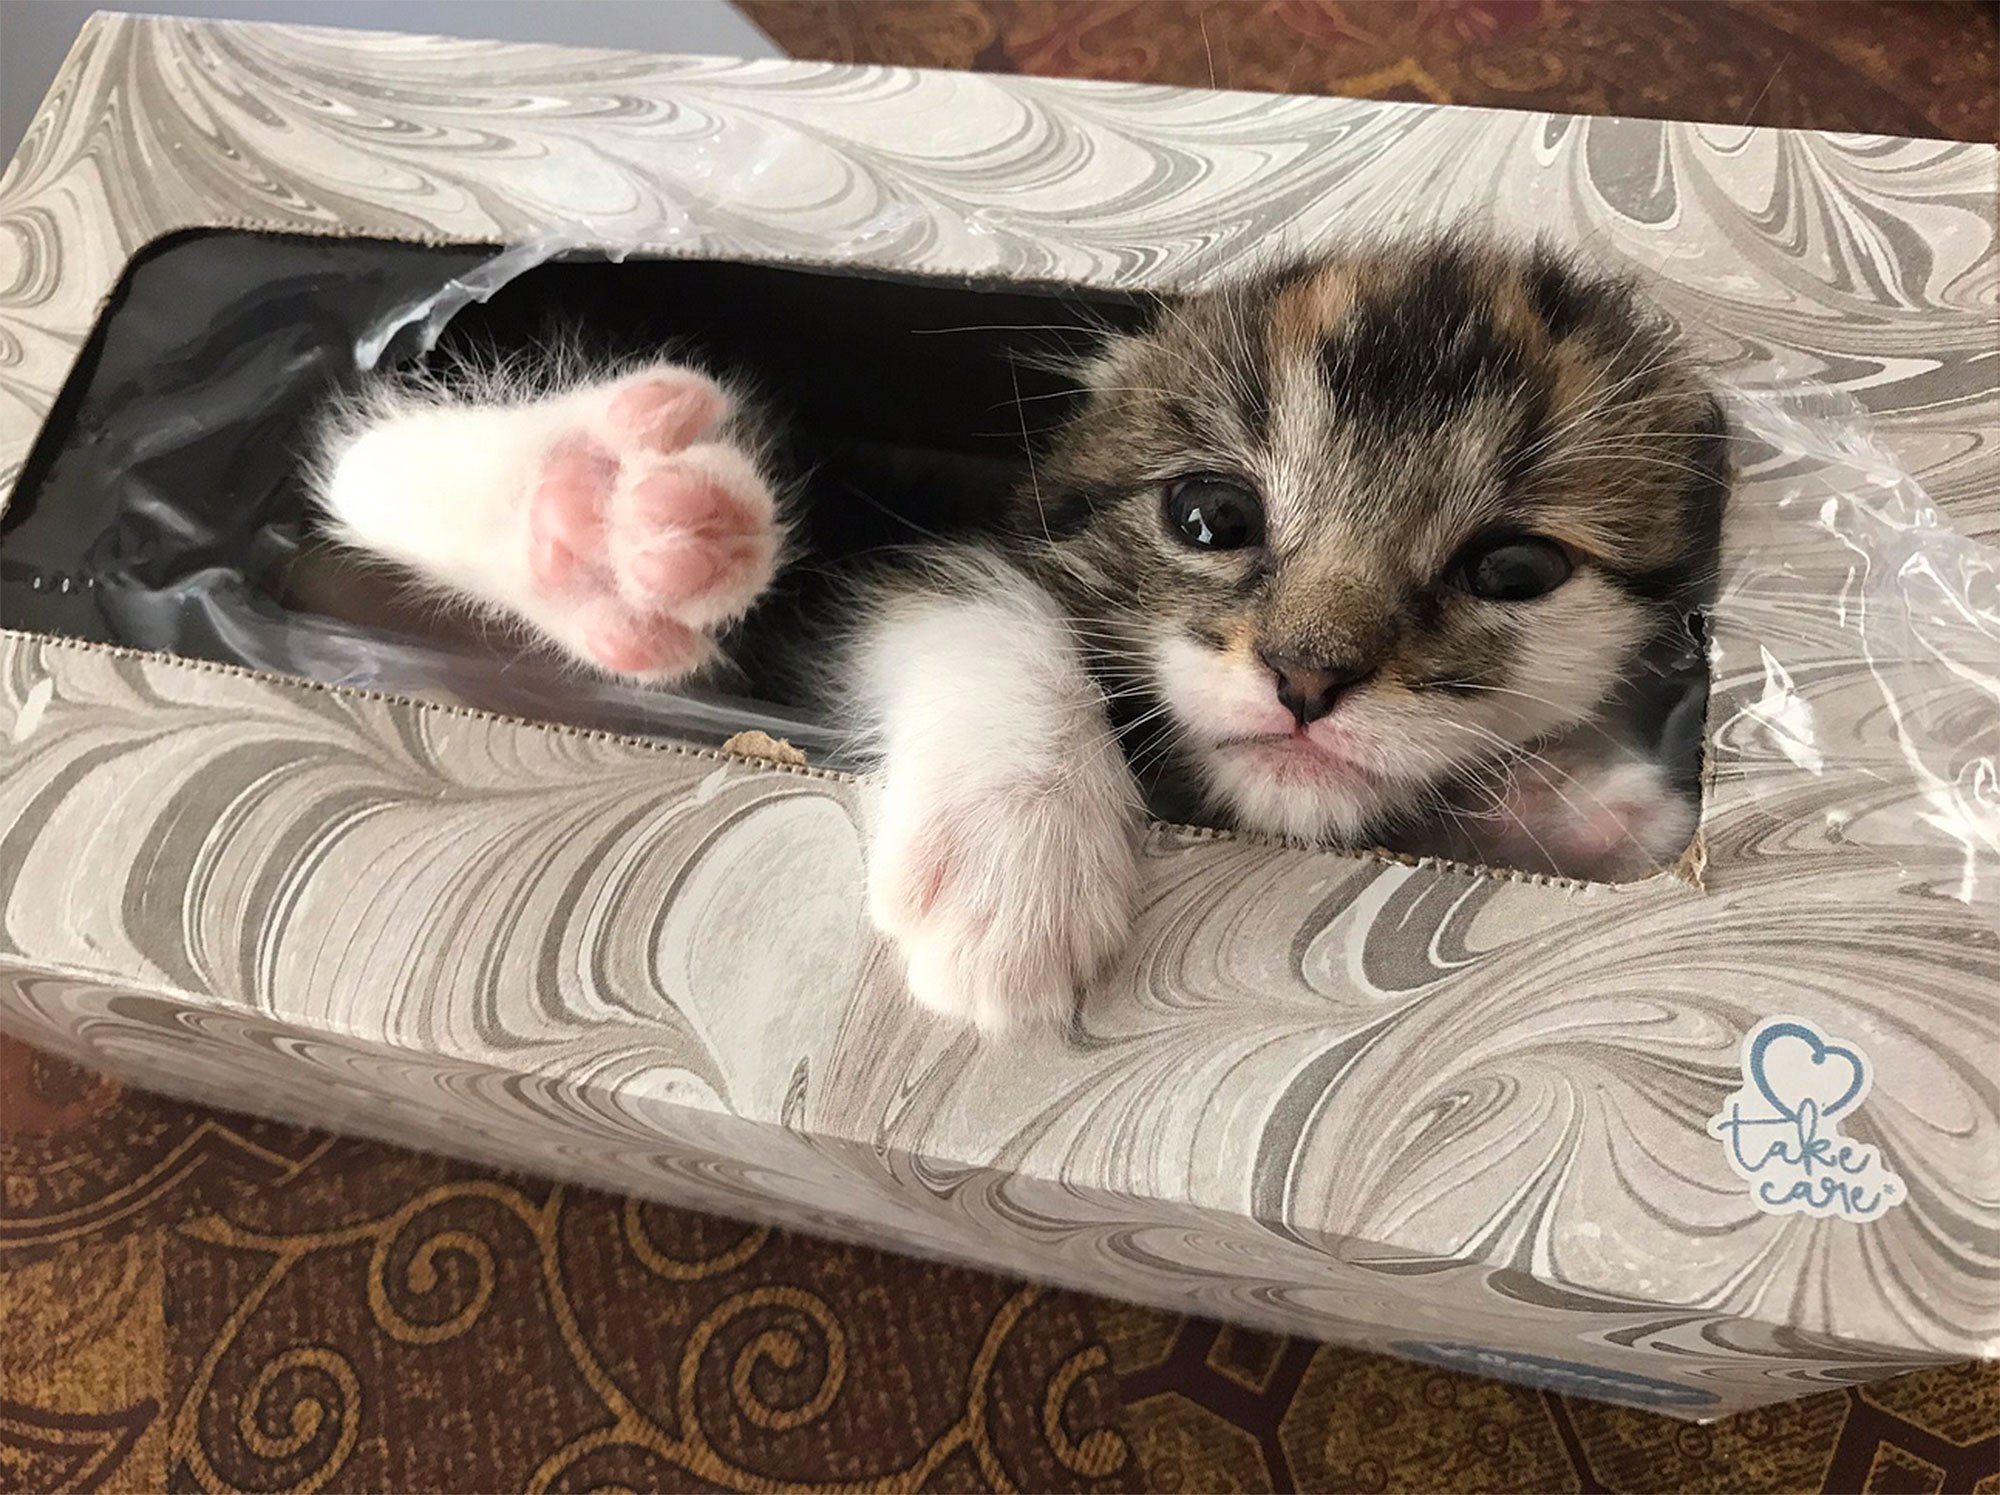 Lost Kitten Found in Tissue Box | PEOPLE.com